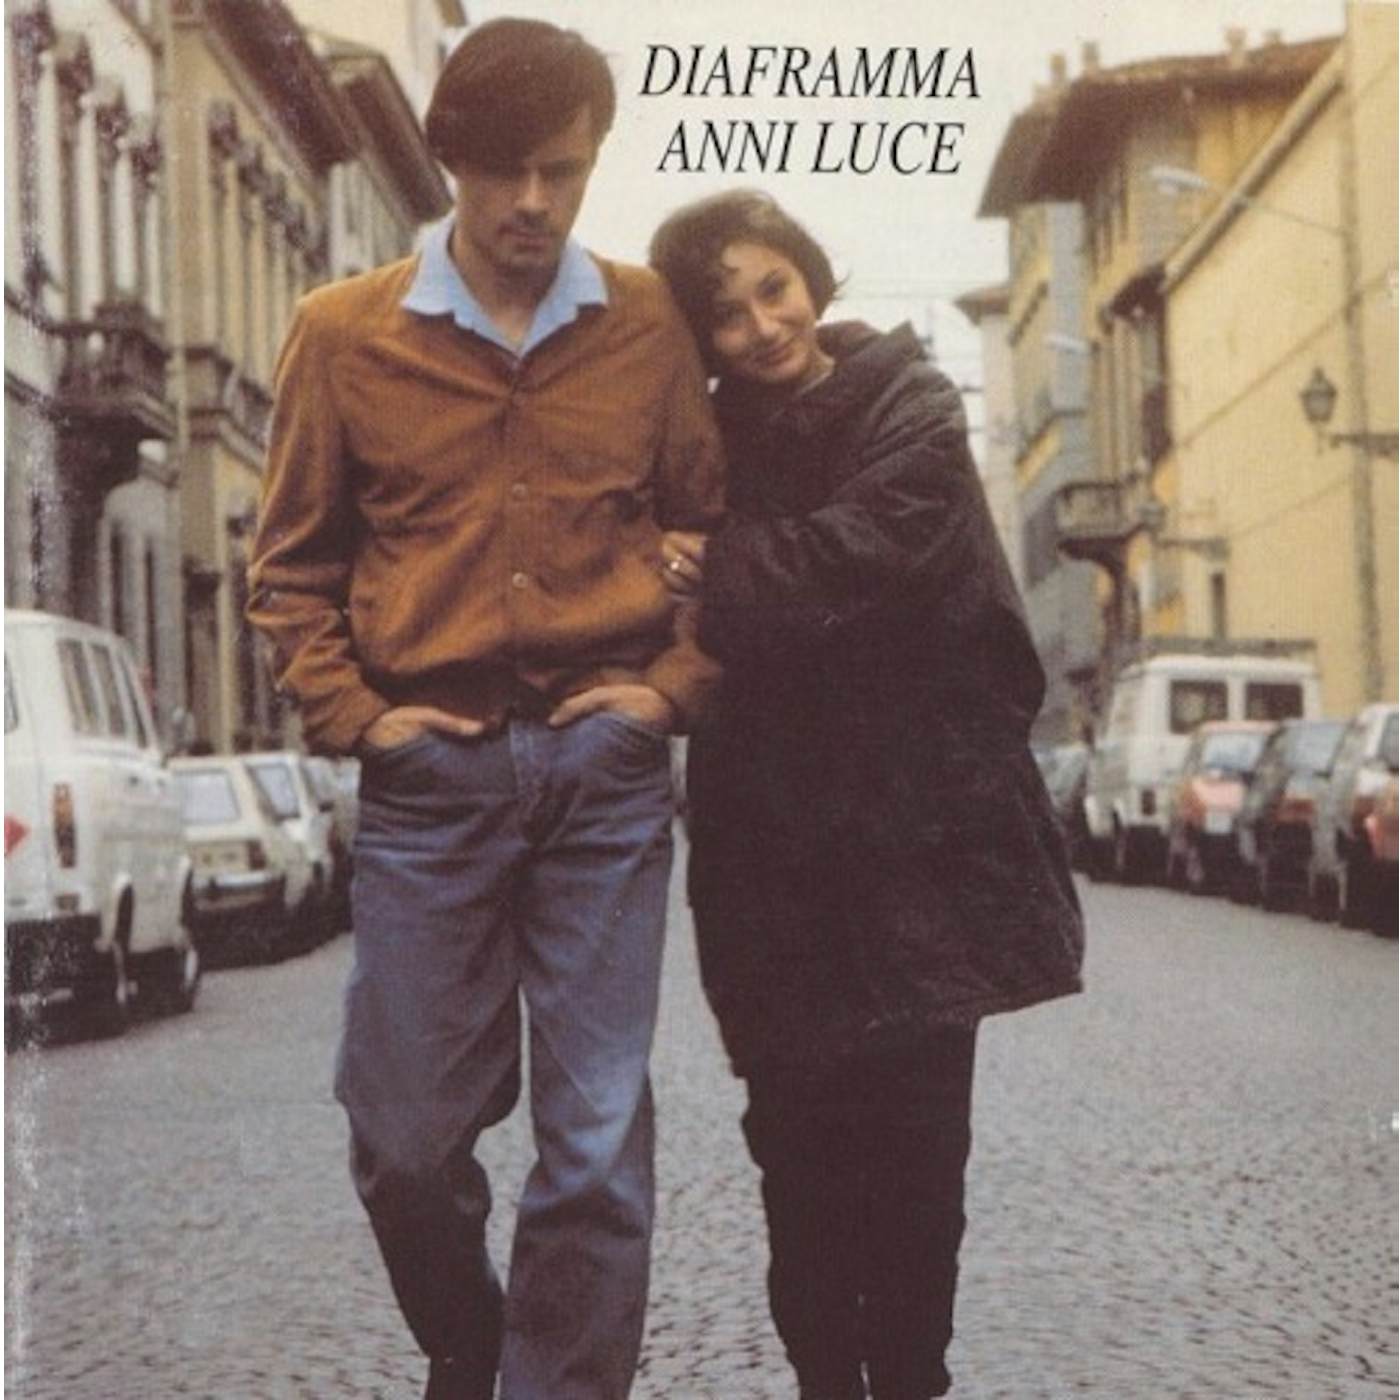 Diaframma Anni luce Vinyl Record